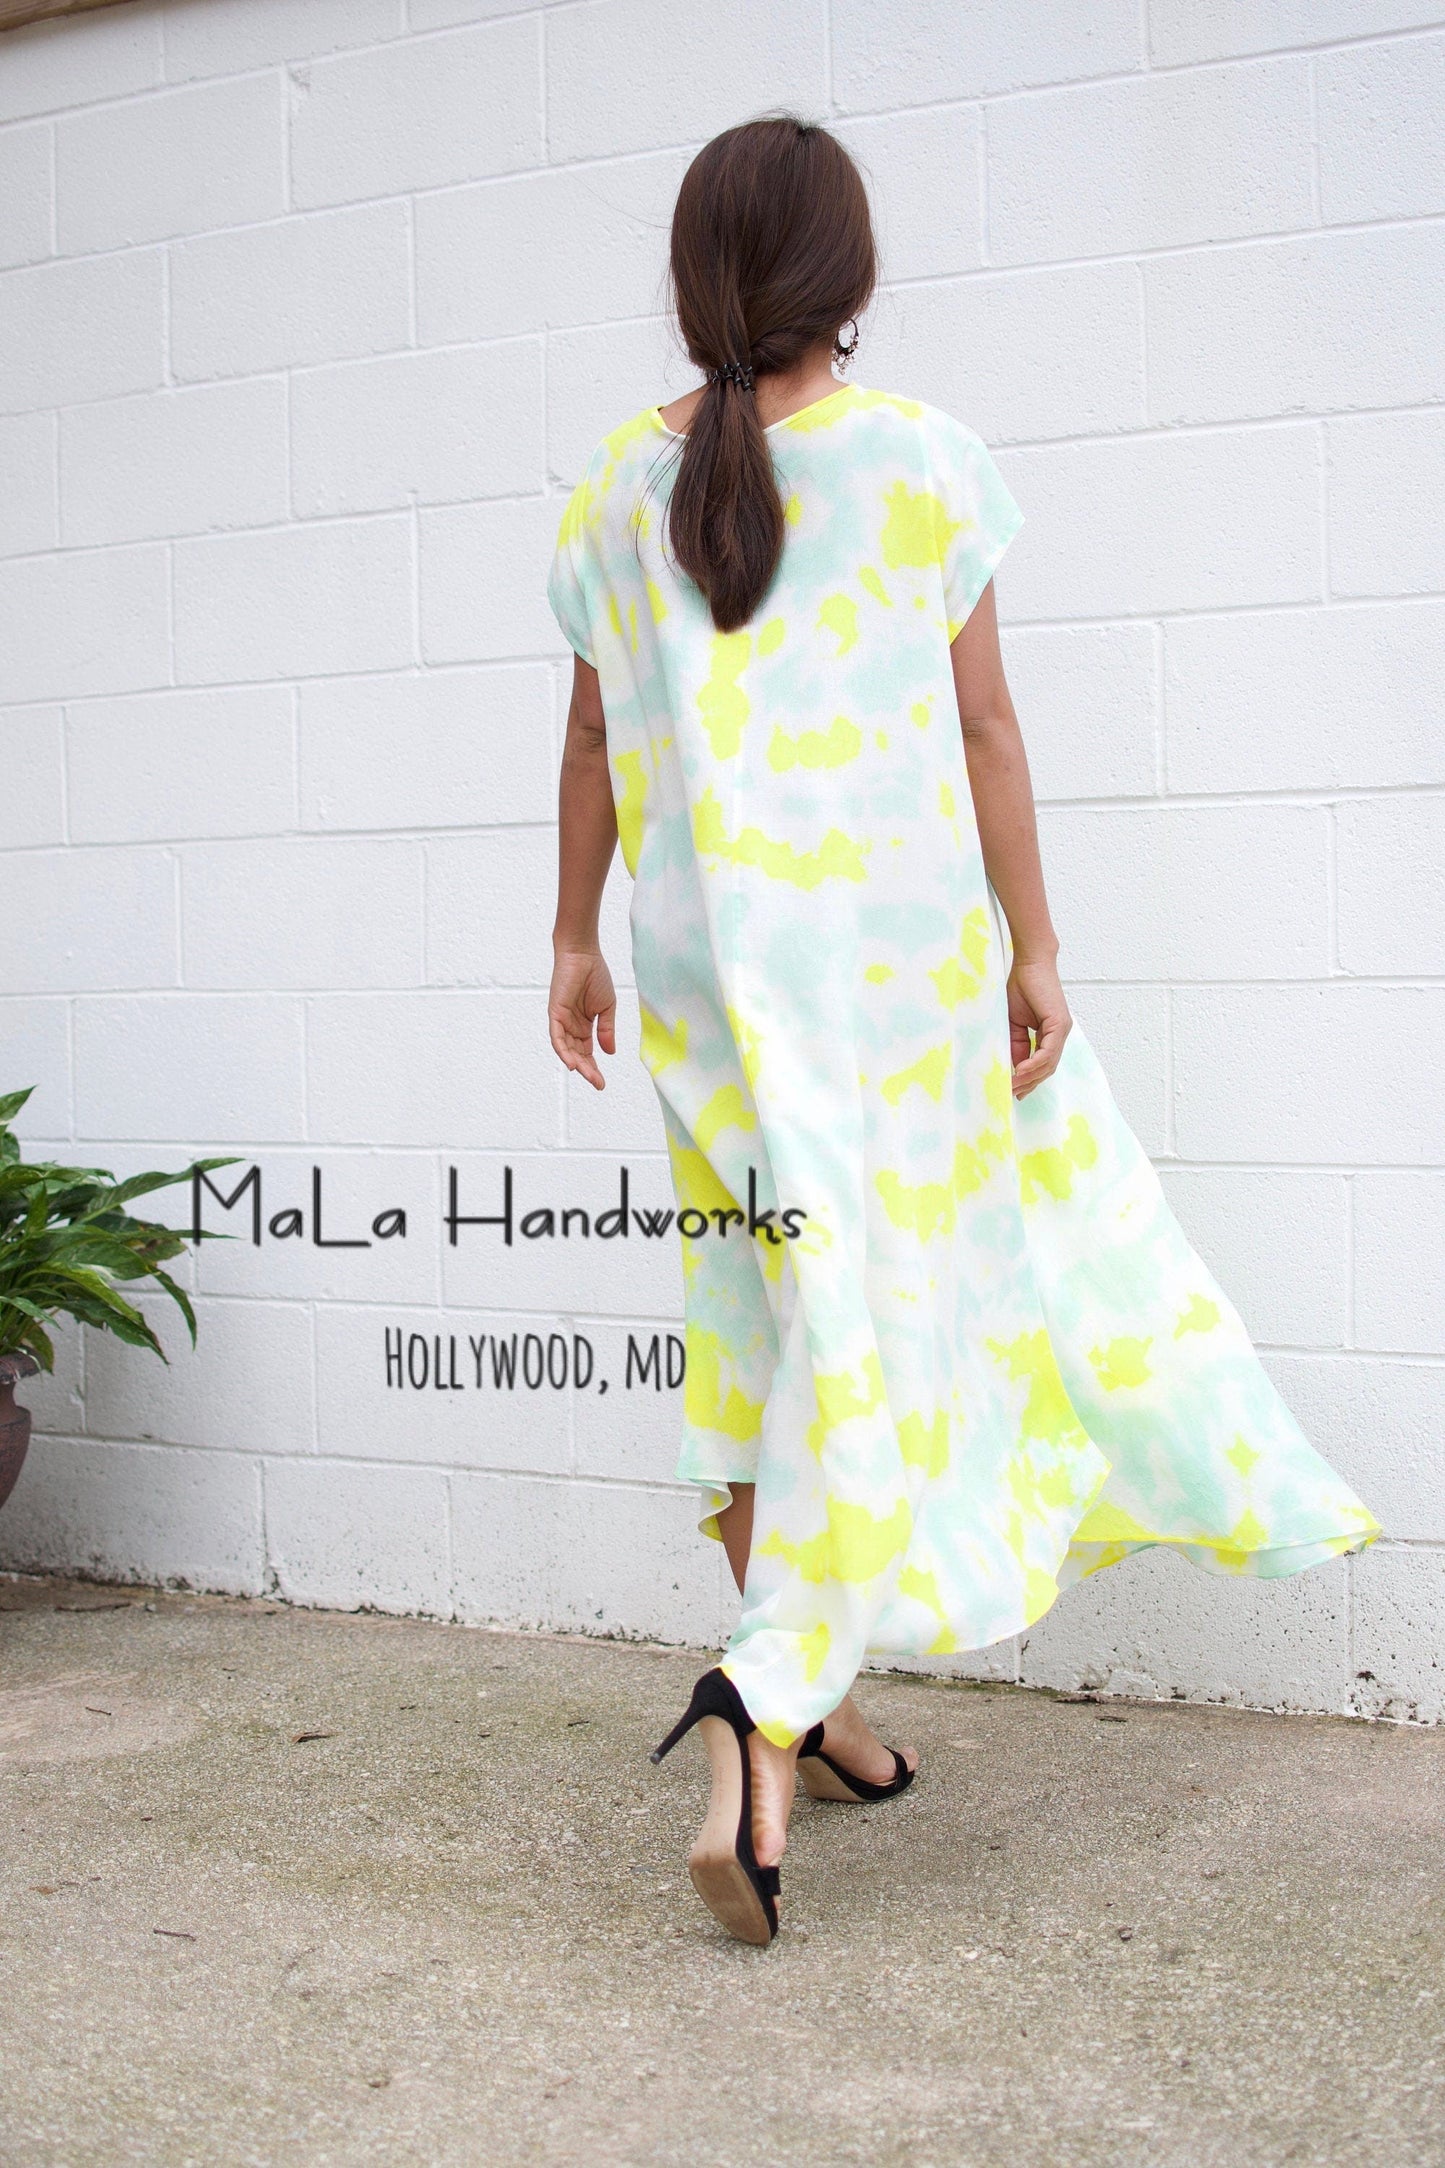 MALA handworks  Greta Dress in LIght Green and Yellow Tie Dye